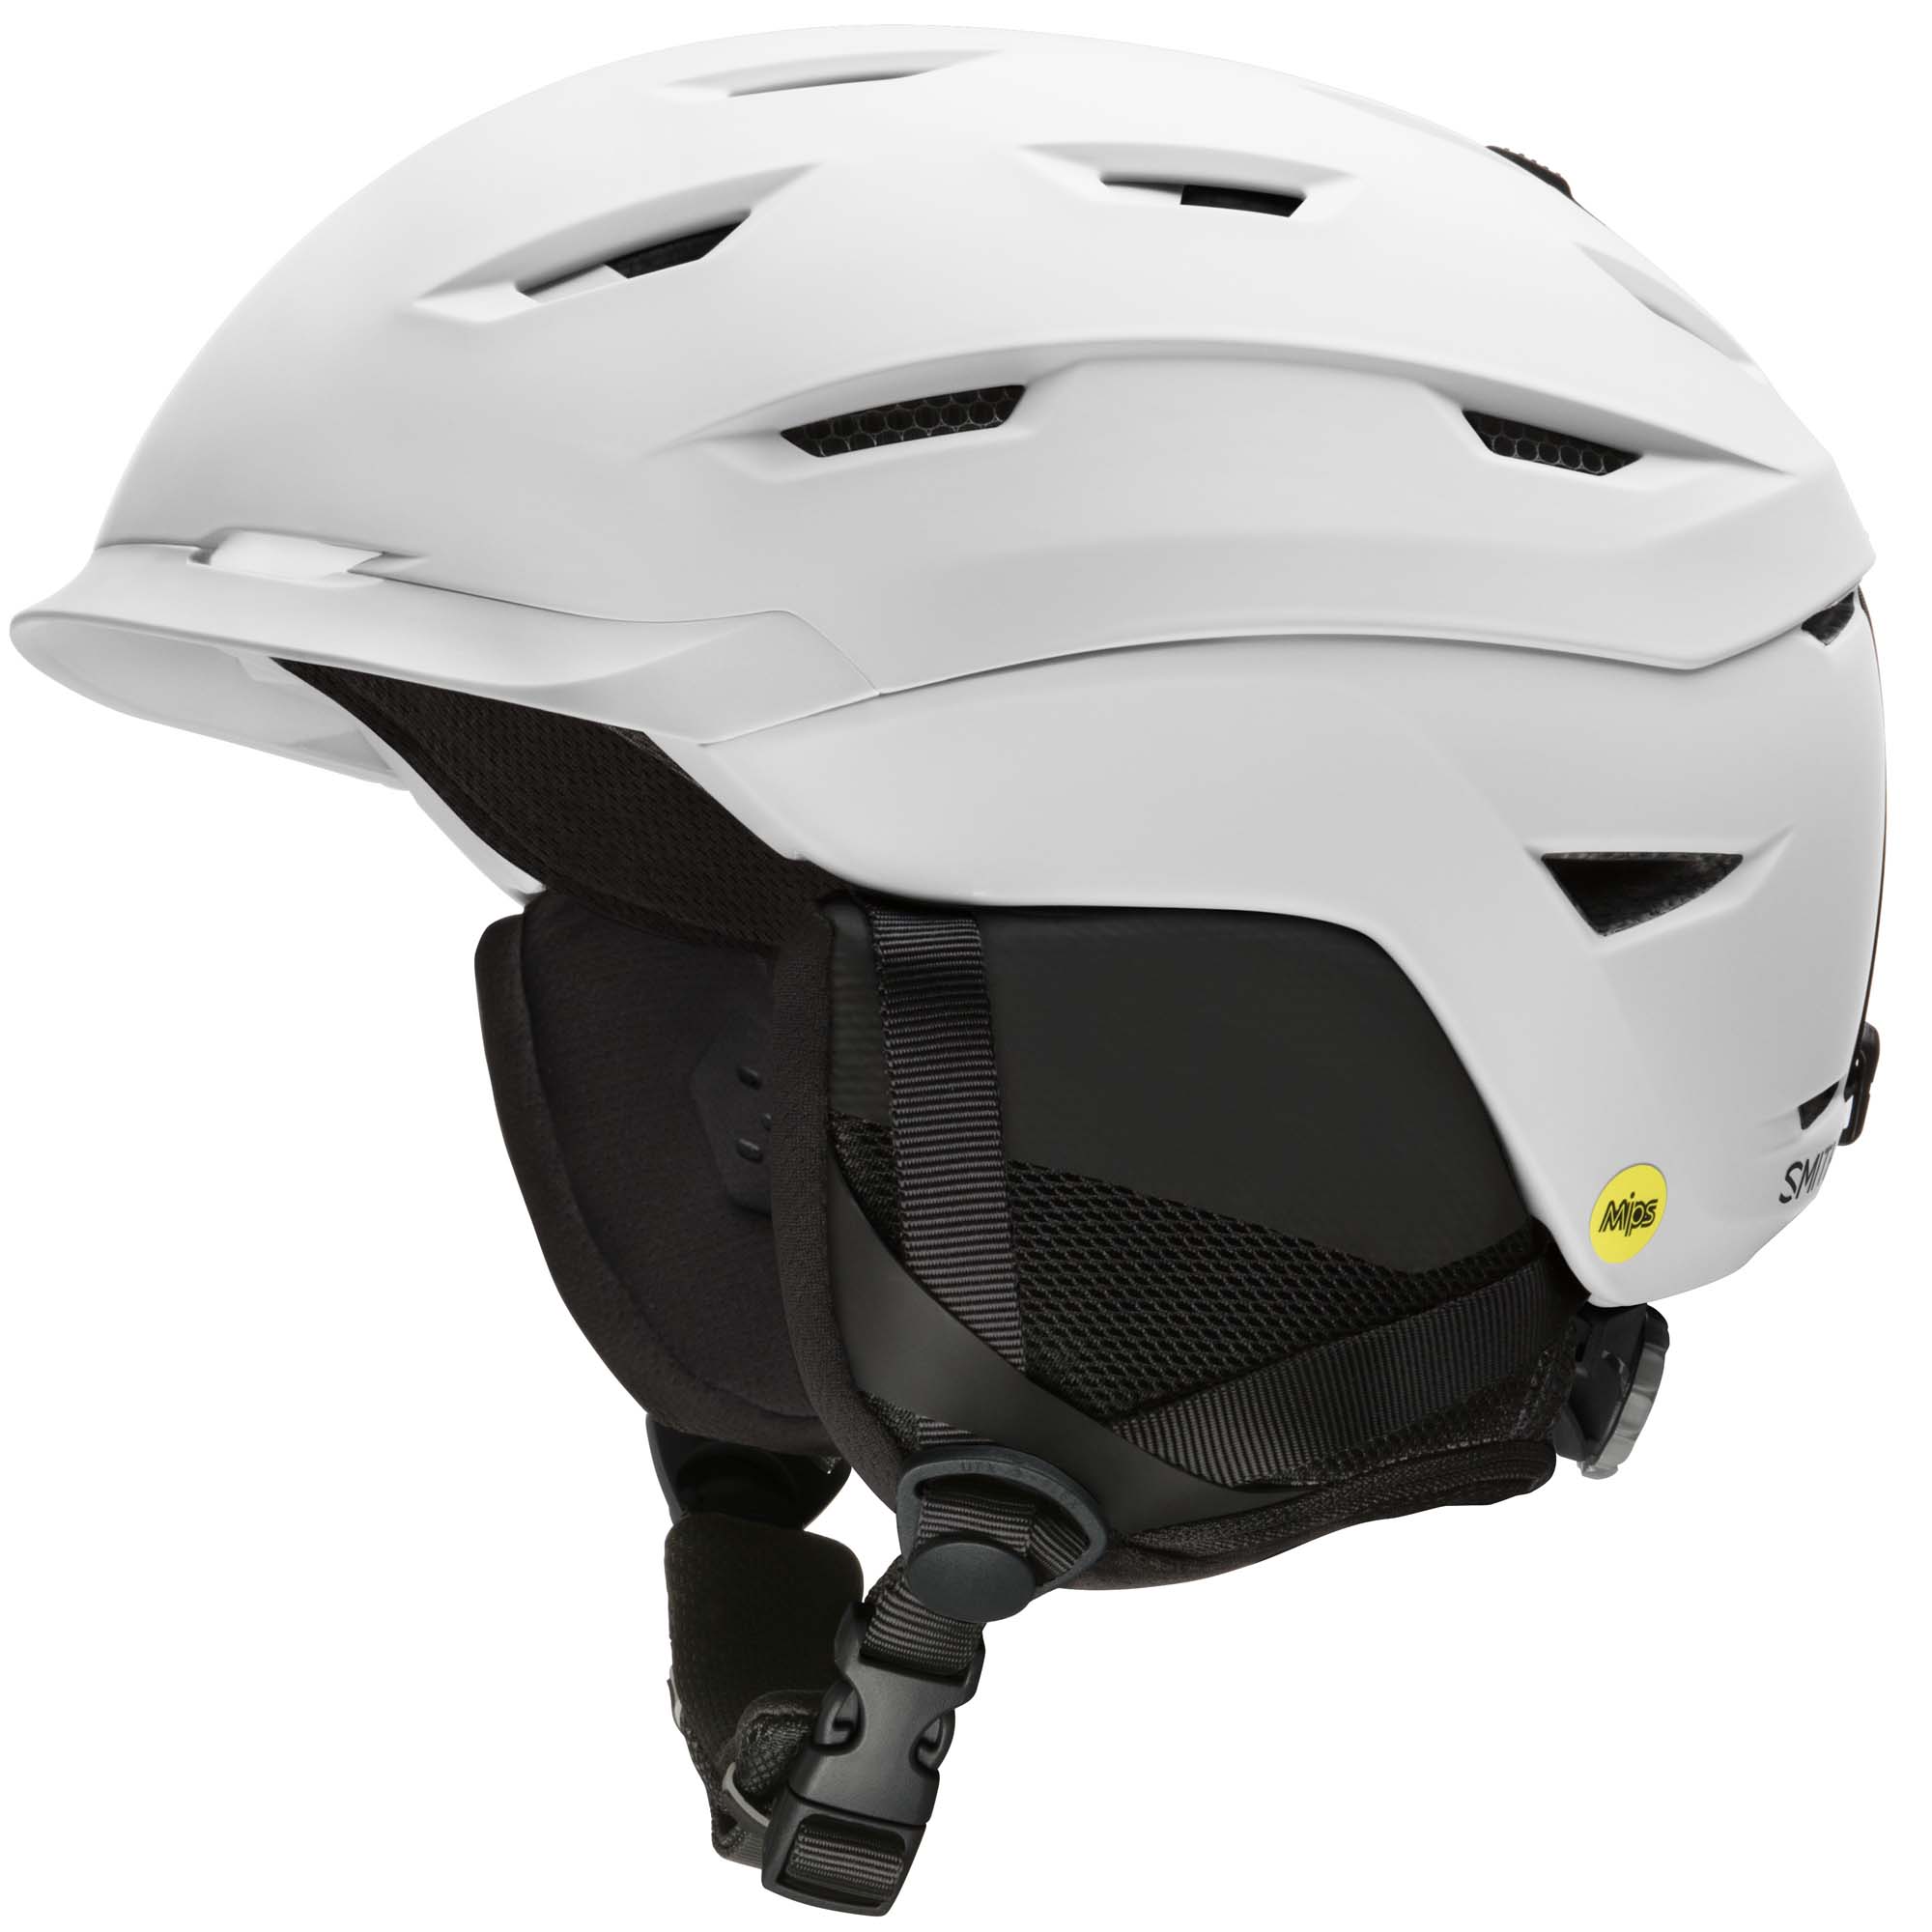 Smith Level MIPS Snowboard/Ski Helmet